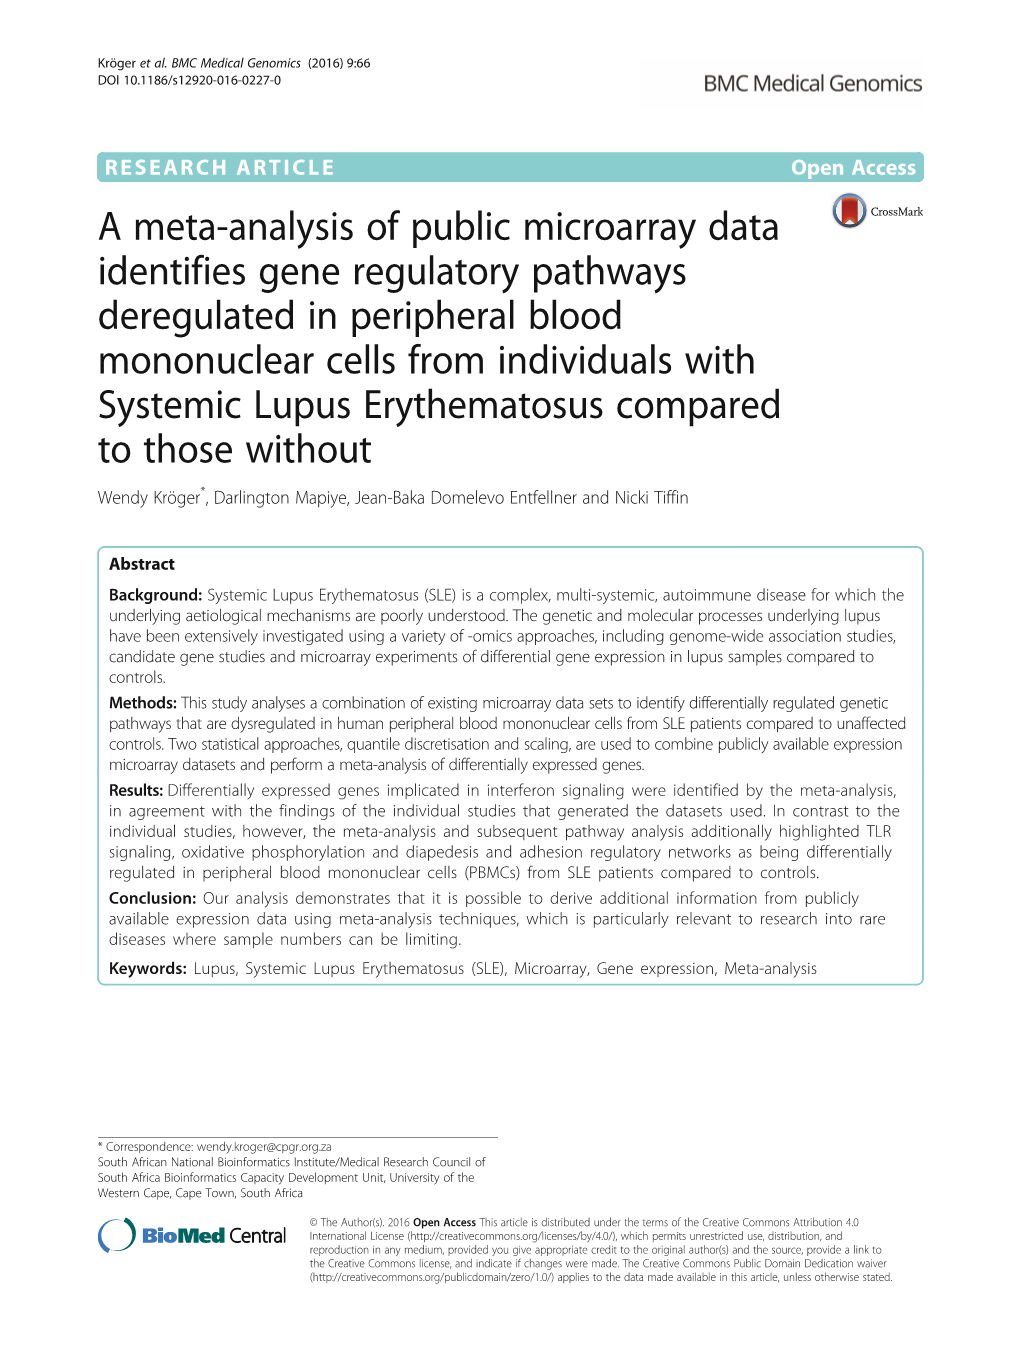 A Meta-Analysis of Public Microarray Data Identifies Gene Regulatory